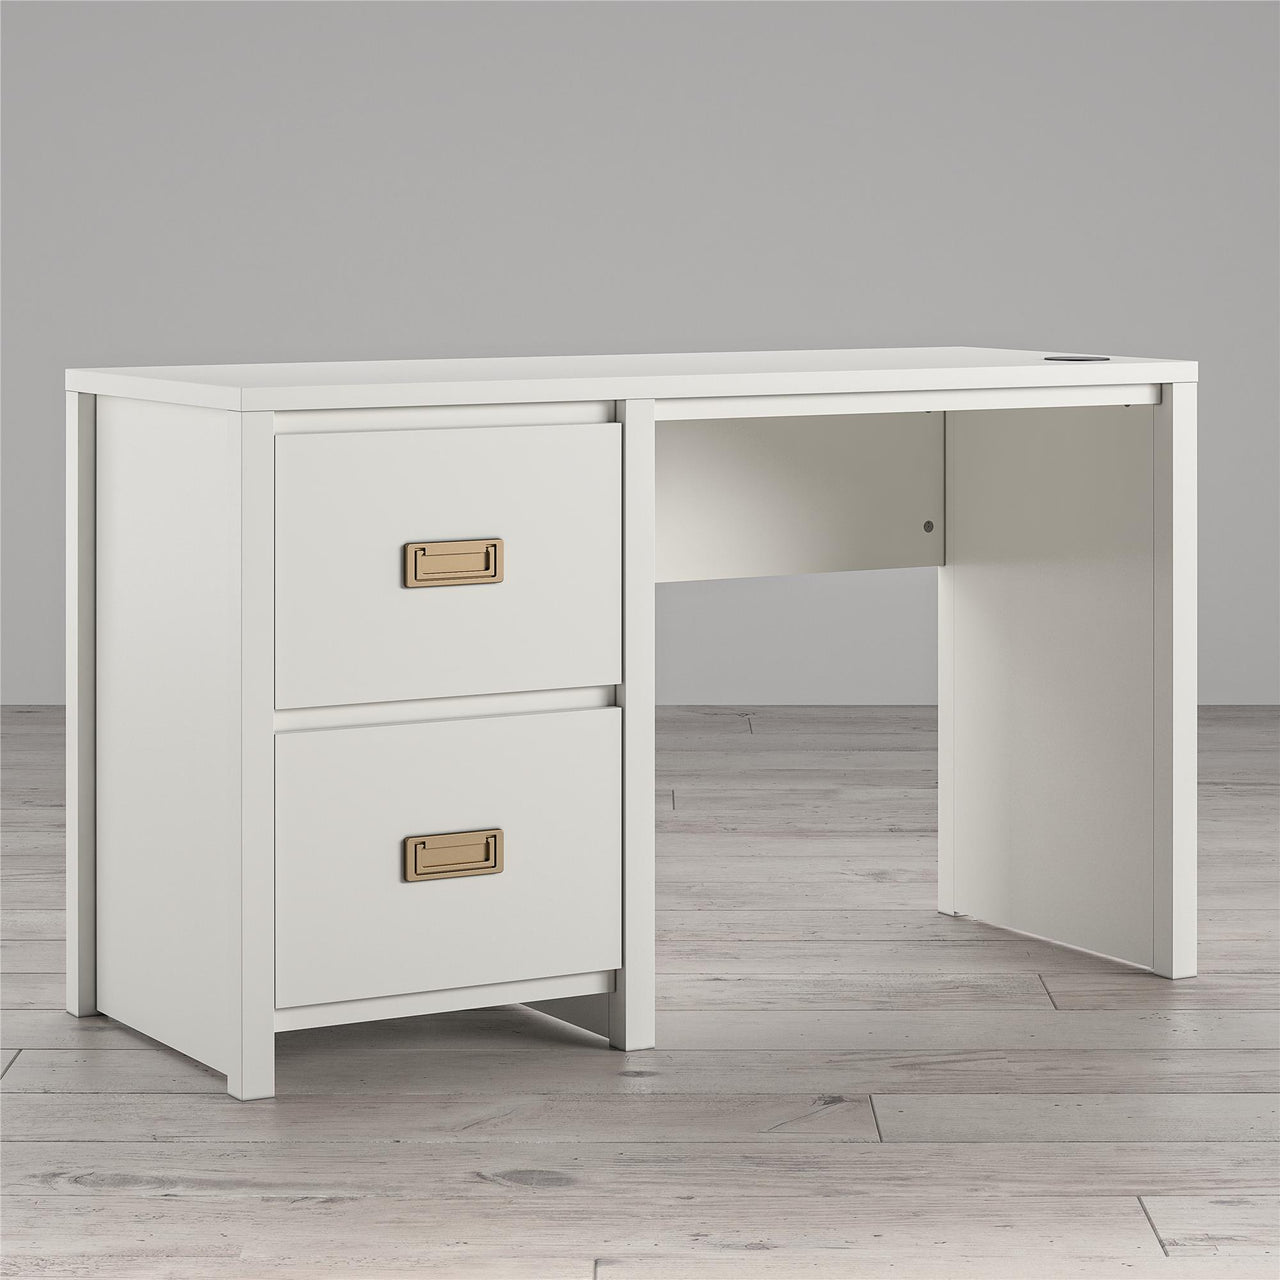 Monarch Hill Haven Single Pedestal Desk - White